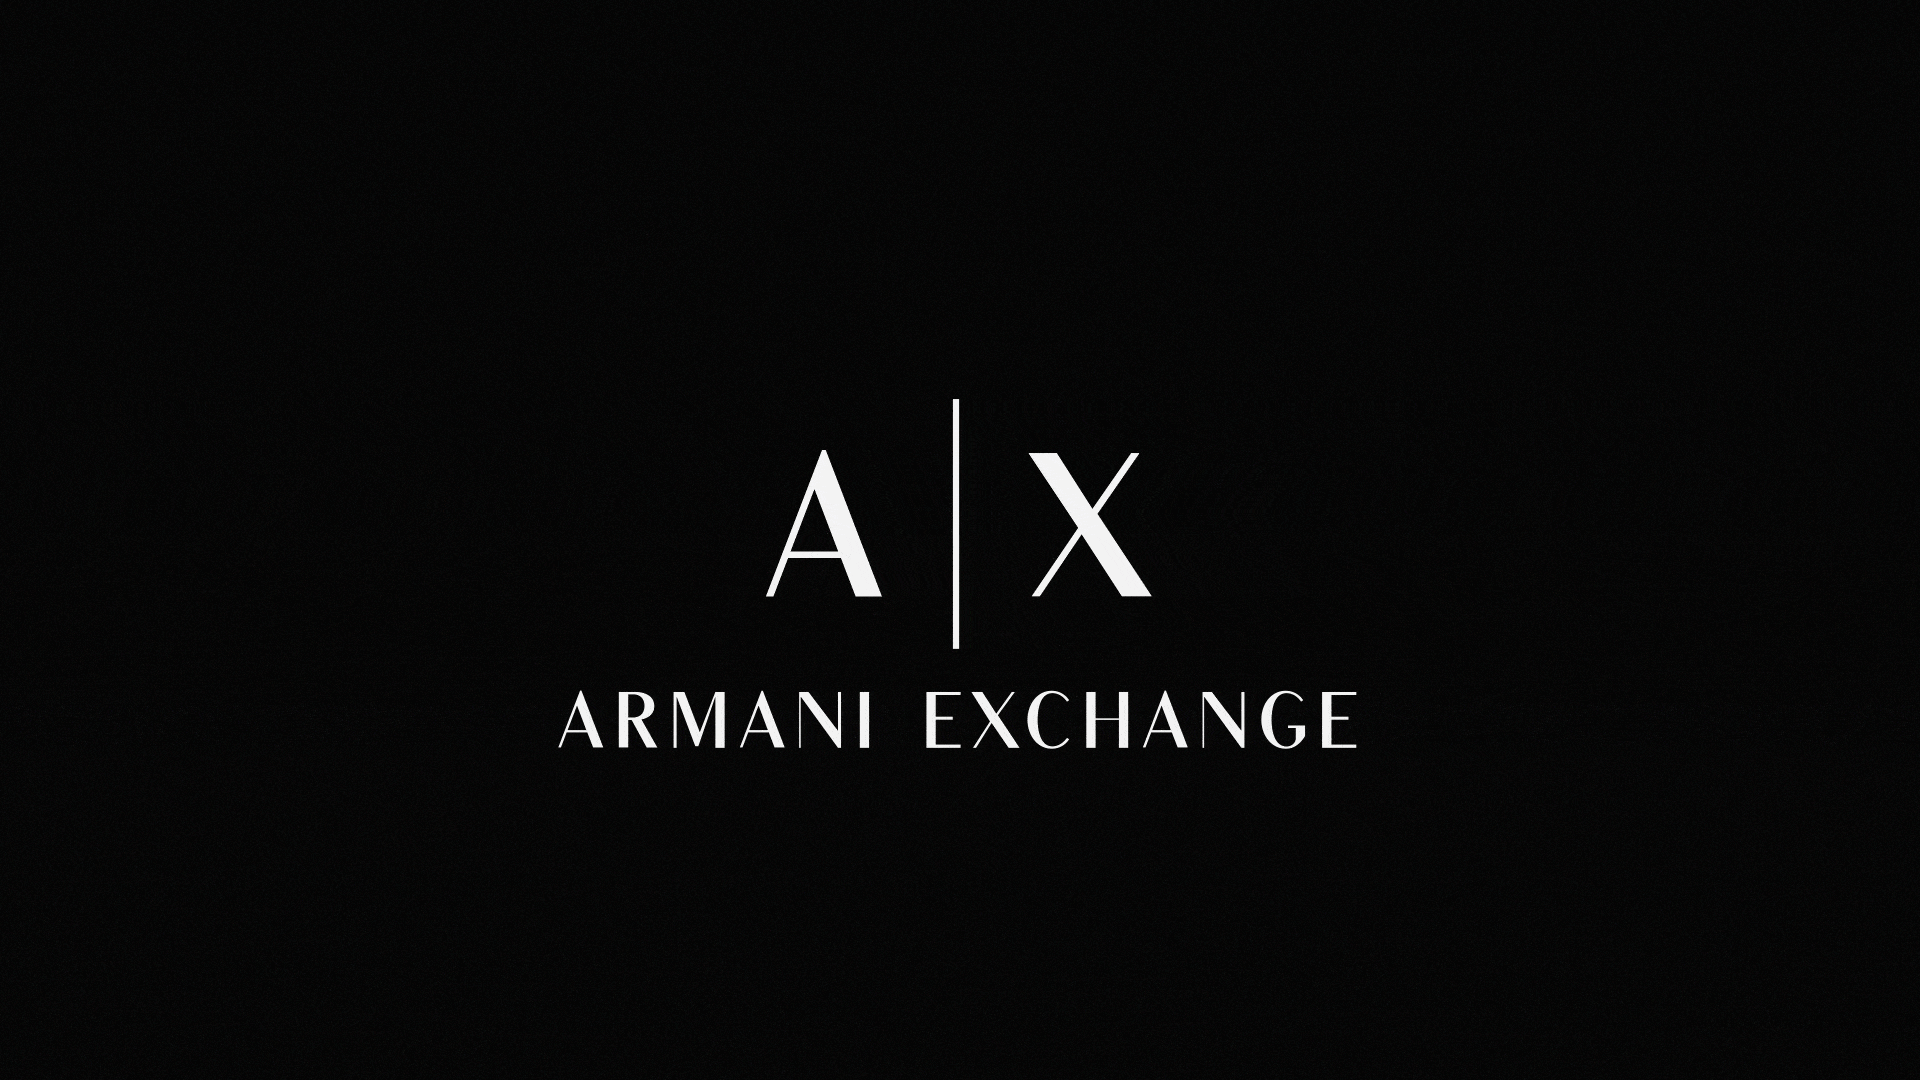 Armani Logo Animation by Michael Nowak on Dribbble